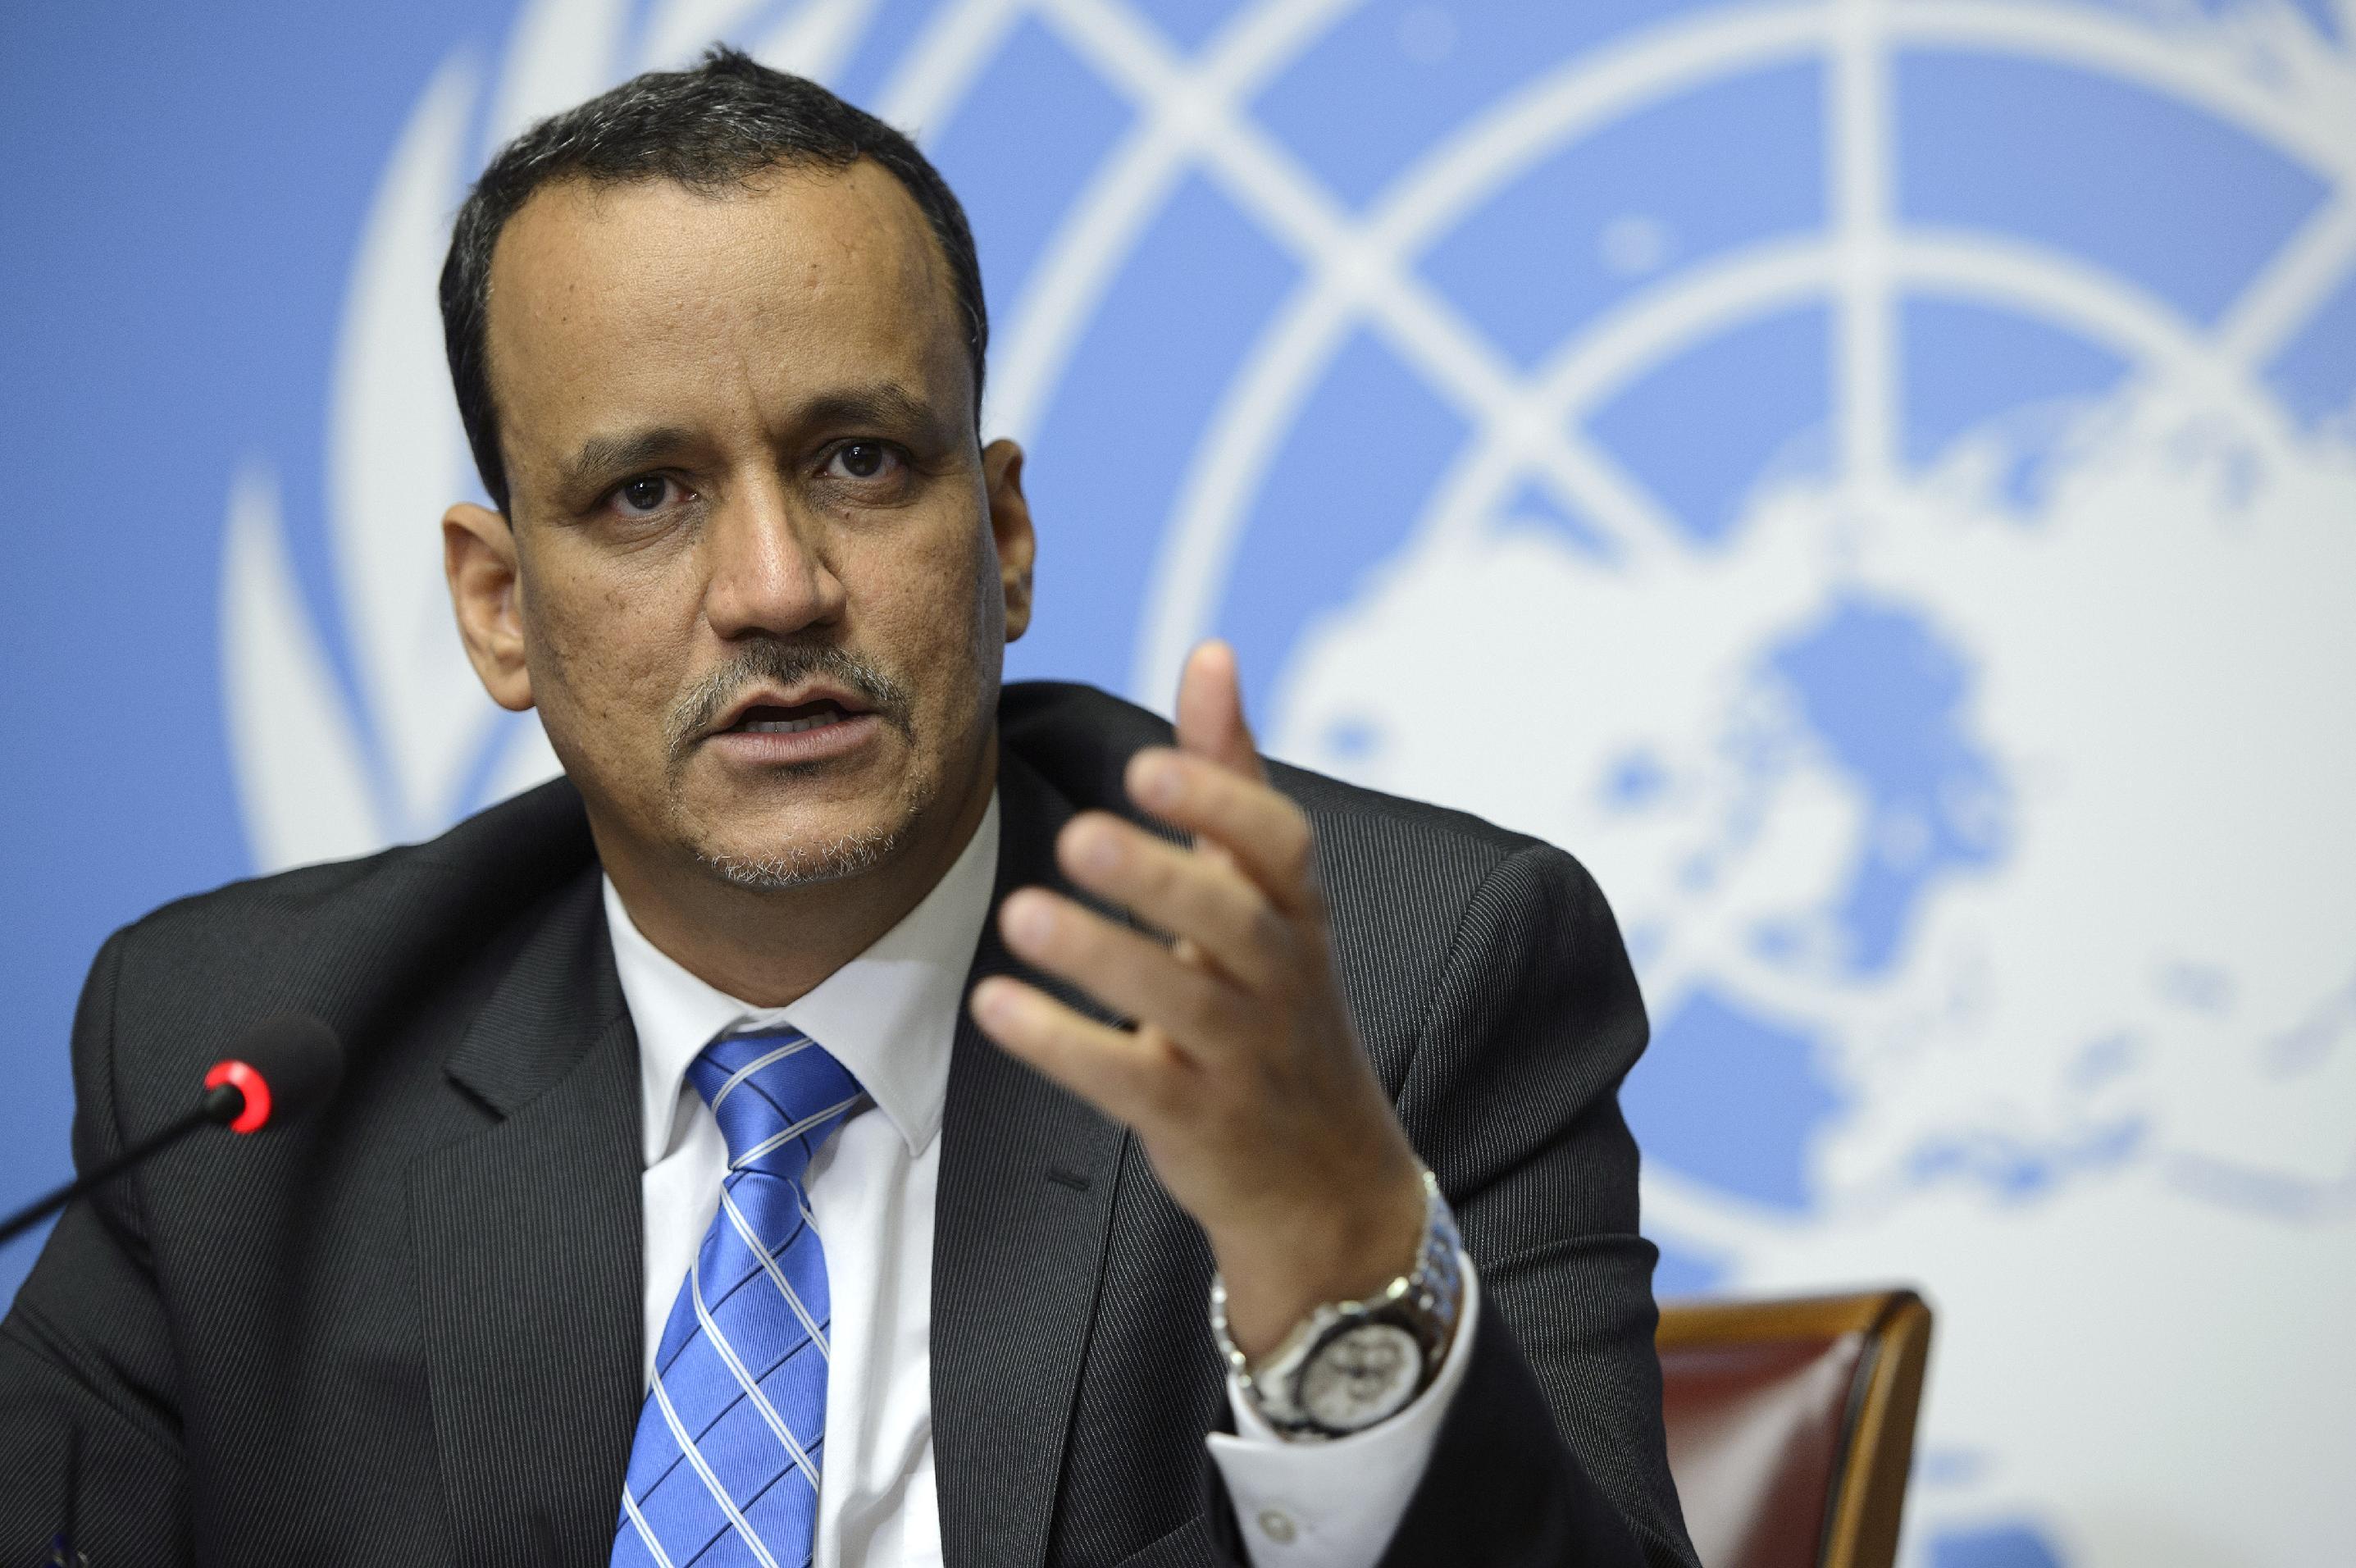 Yemen ceasefire set to start on Wednesday night: U.N envoy